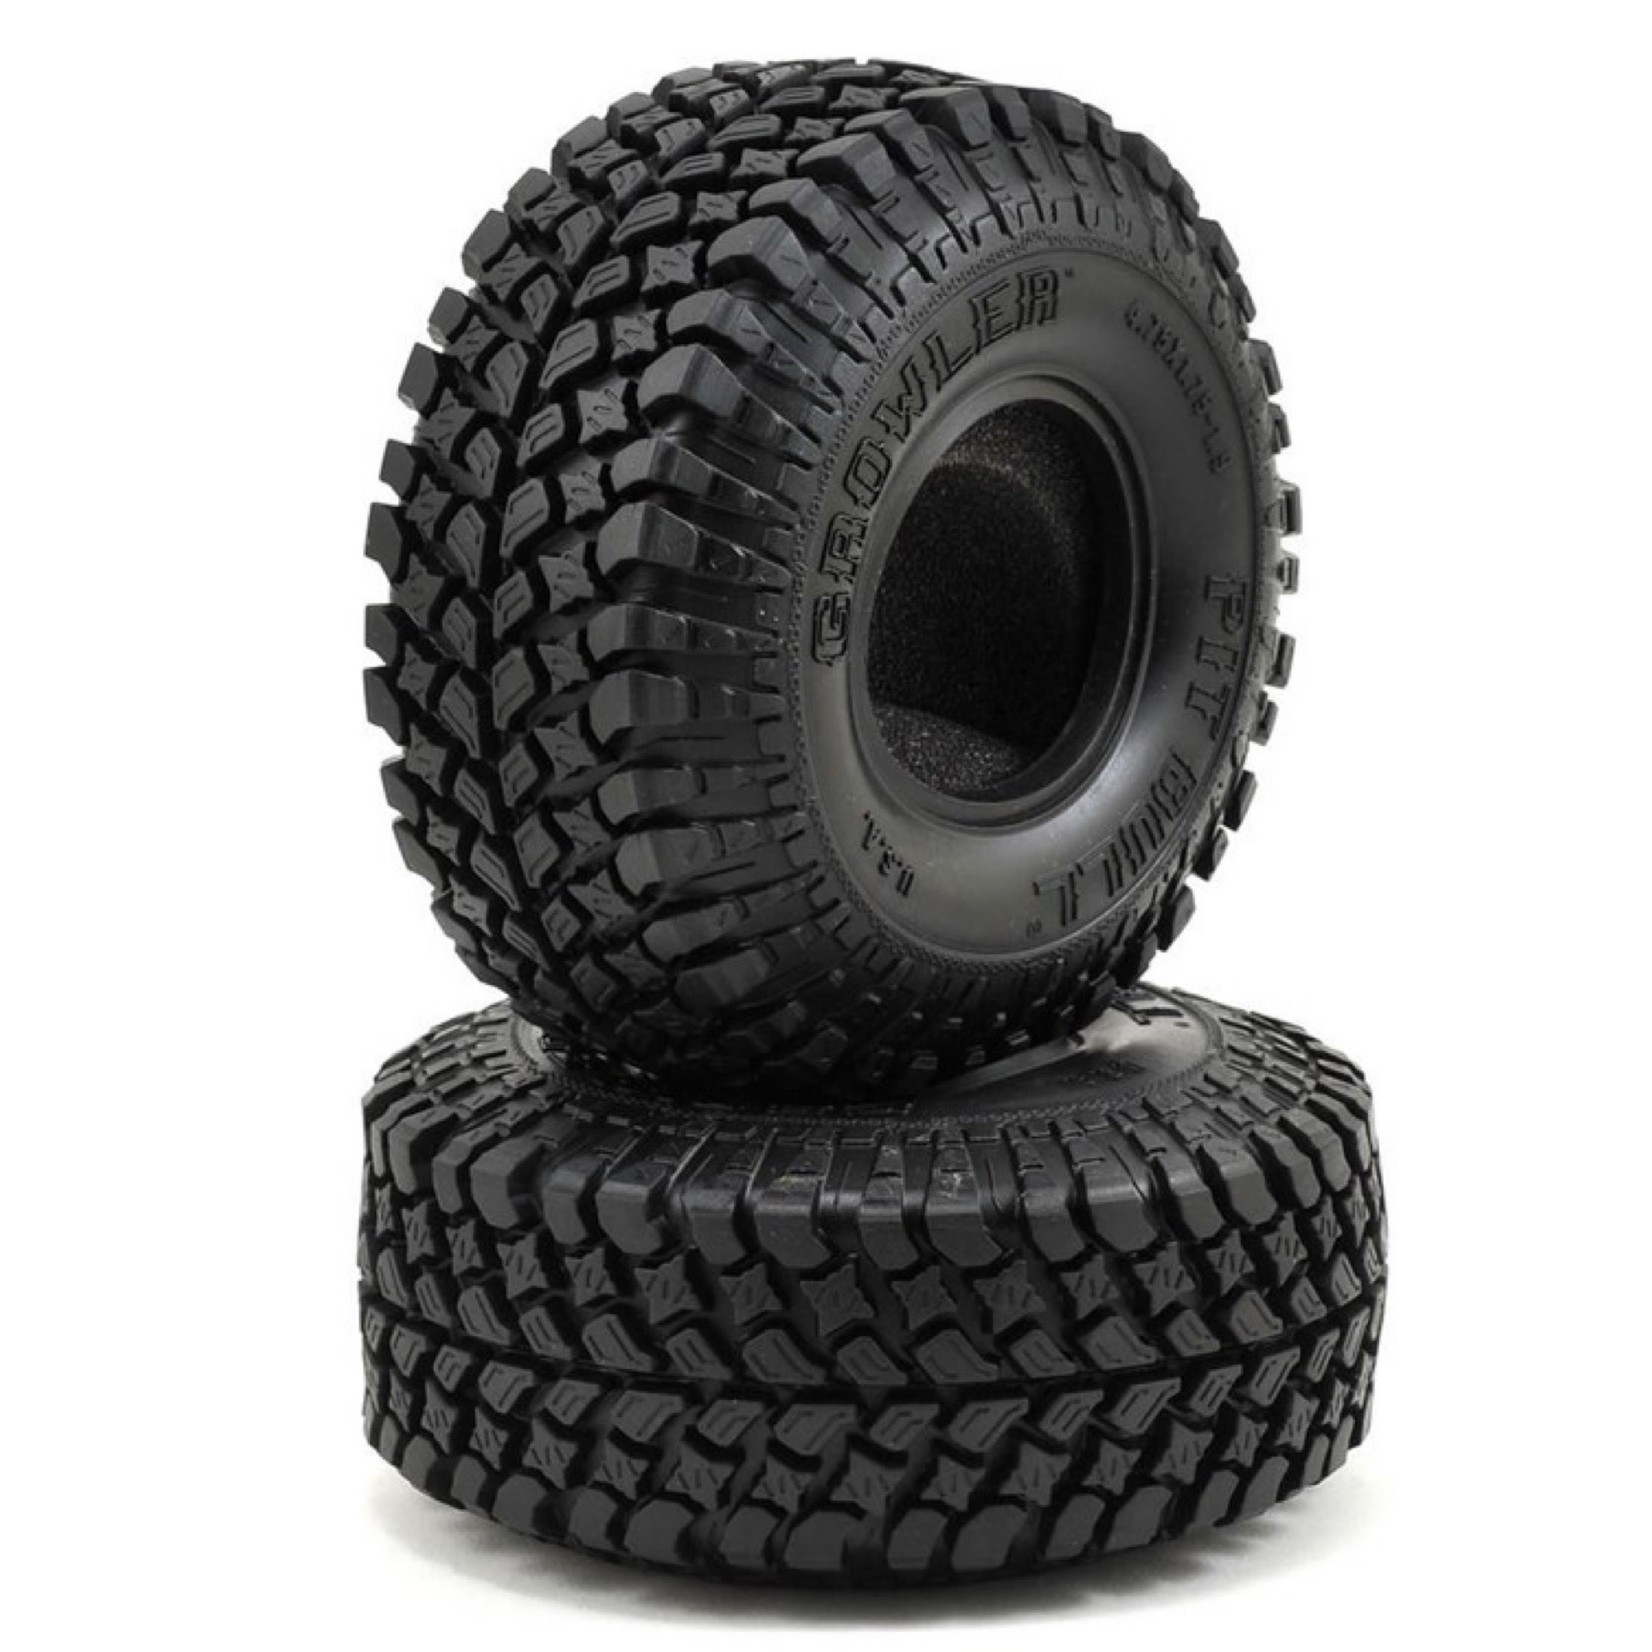 Pit Bull Pit Bull Tires Growler AT/Extra 1.9" Scale Rock Crawler Tires (2) (Komp) w/Foam #PB9006NK